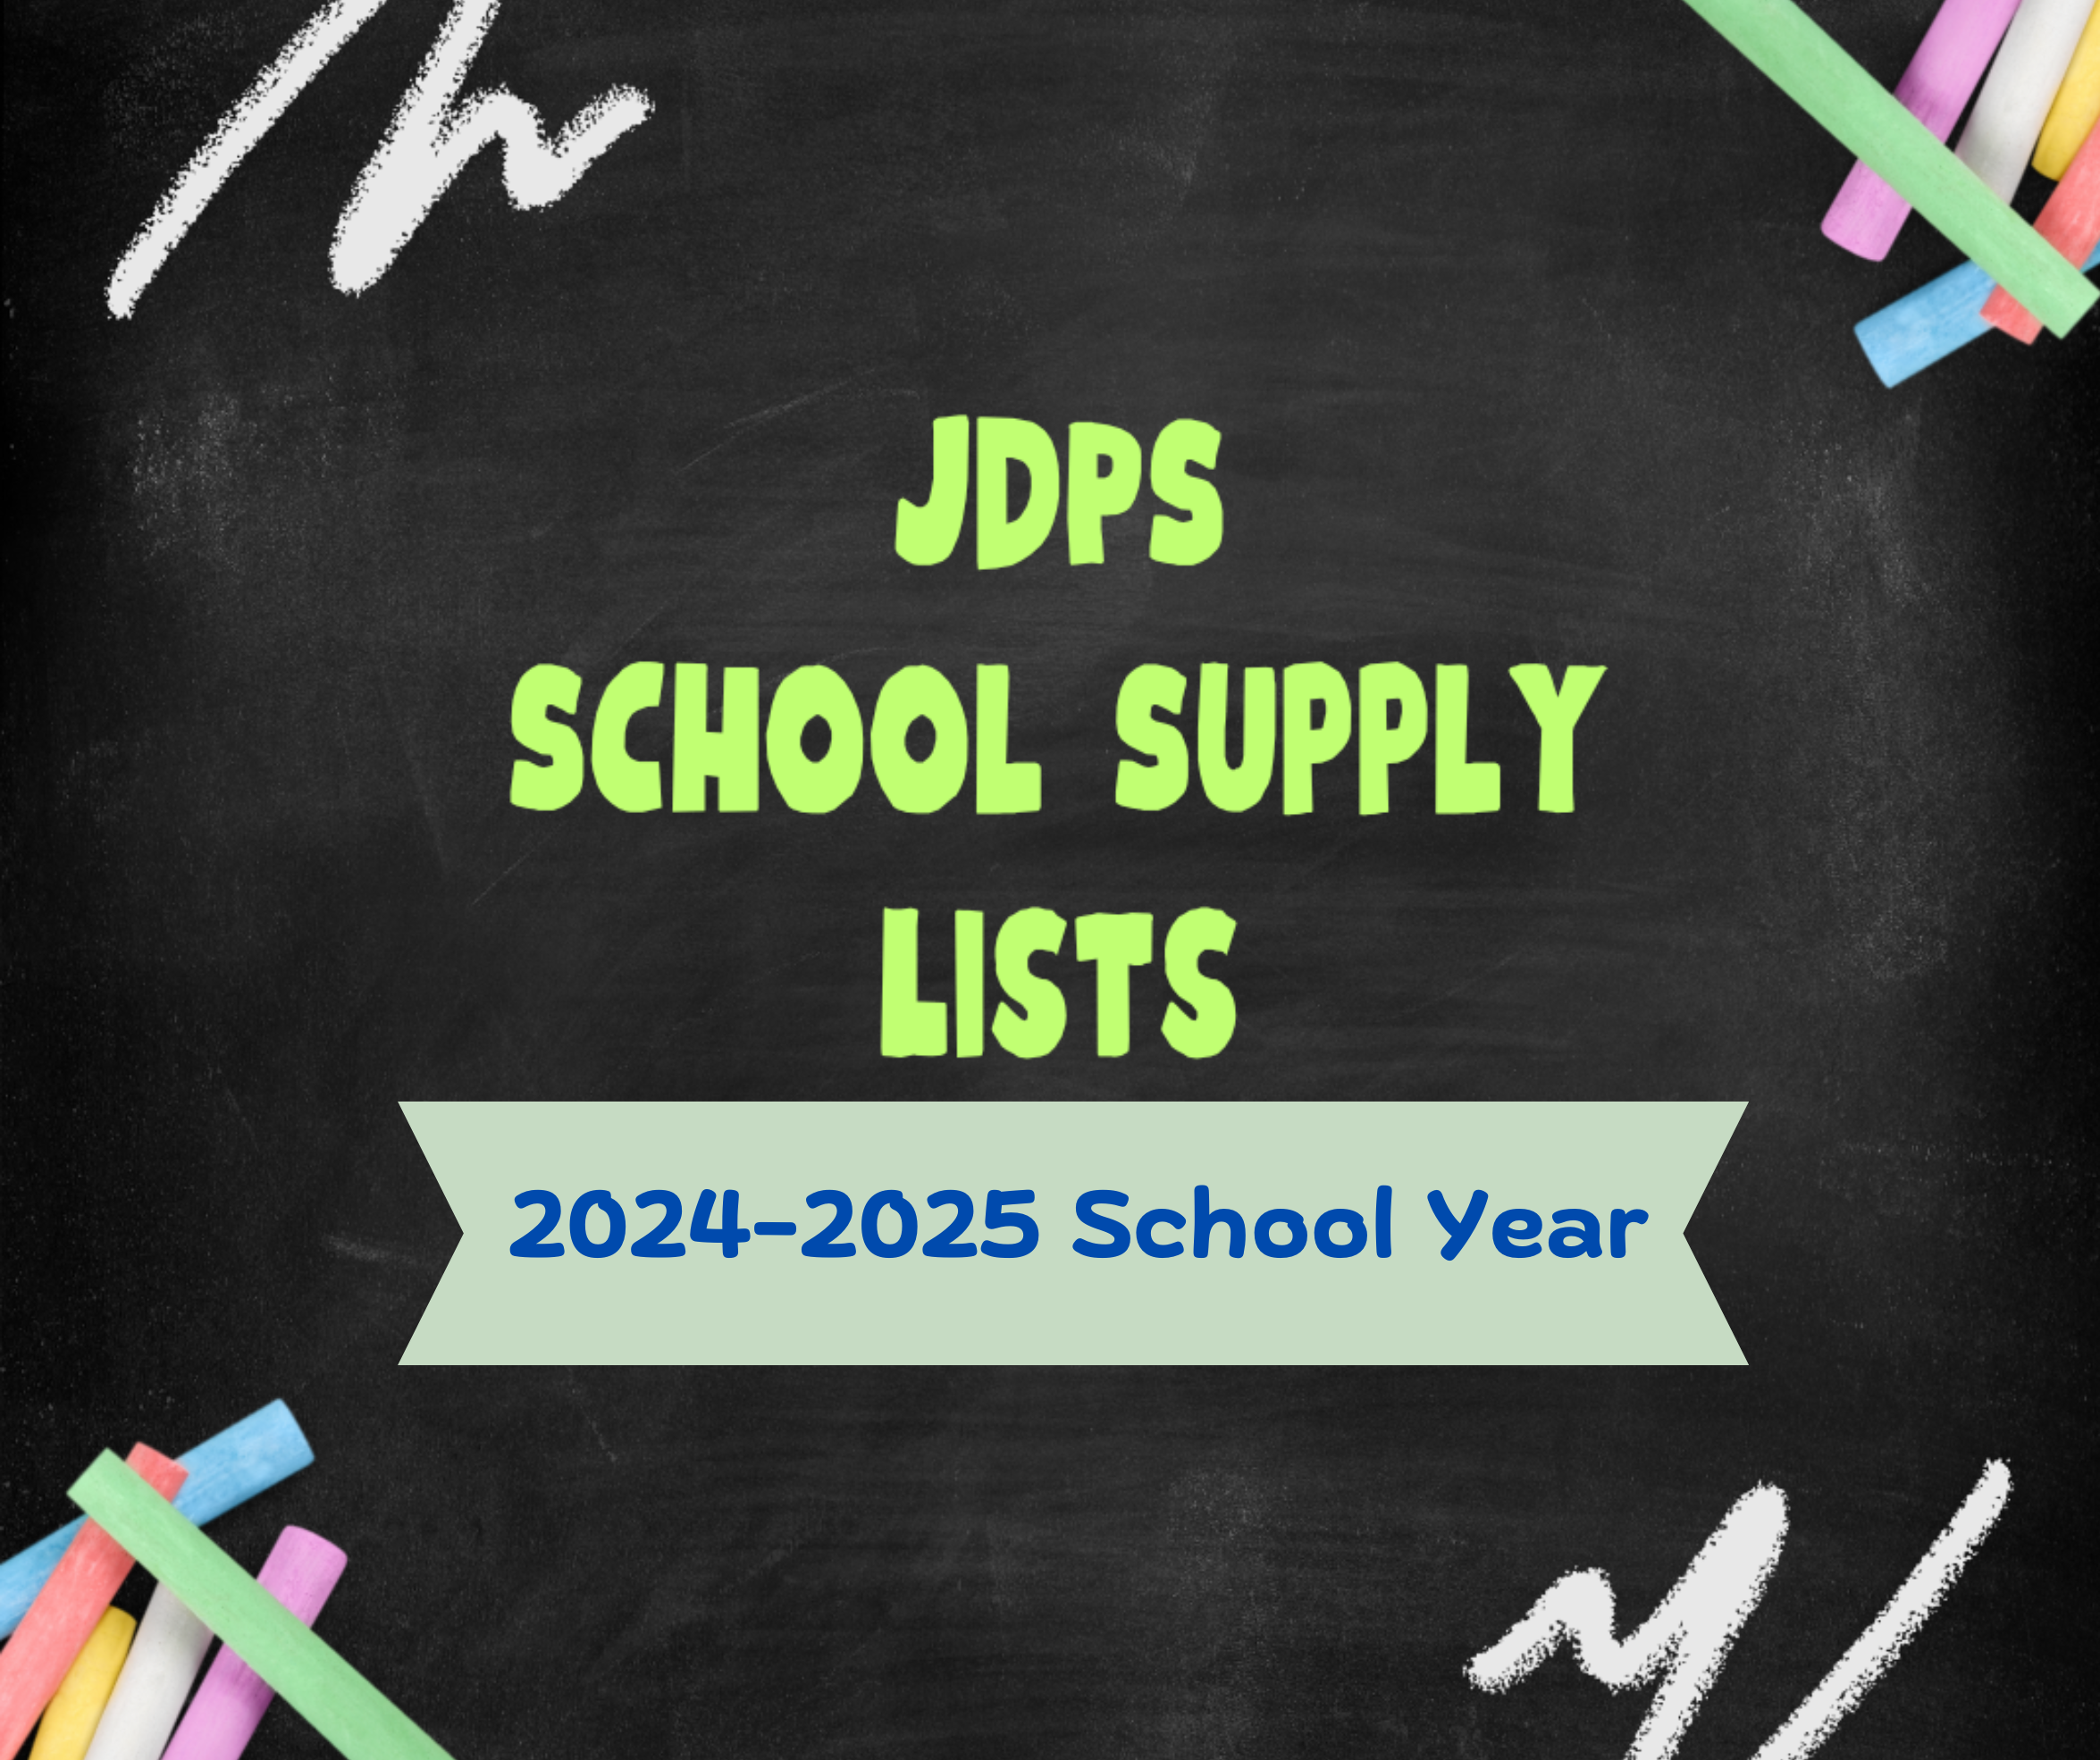 JDPS School Supply List Cover